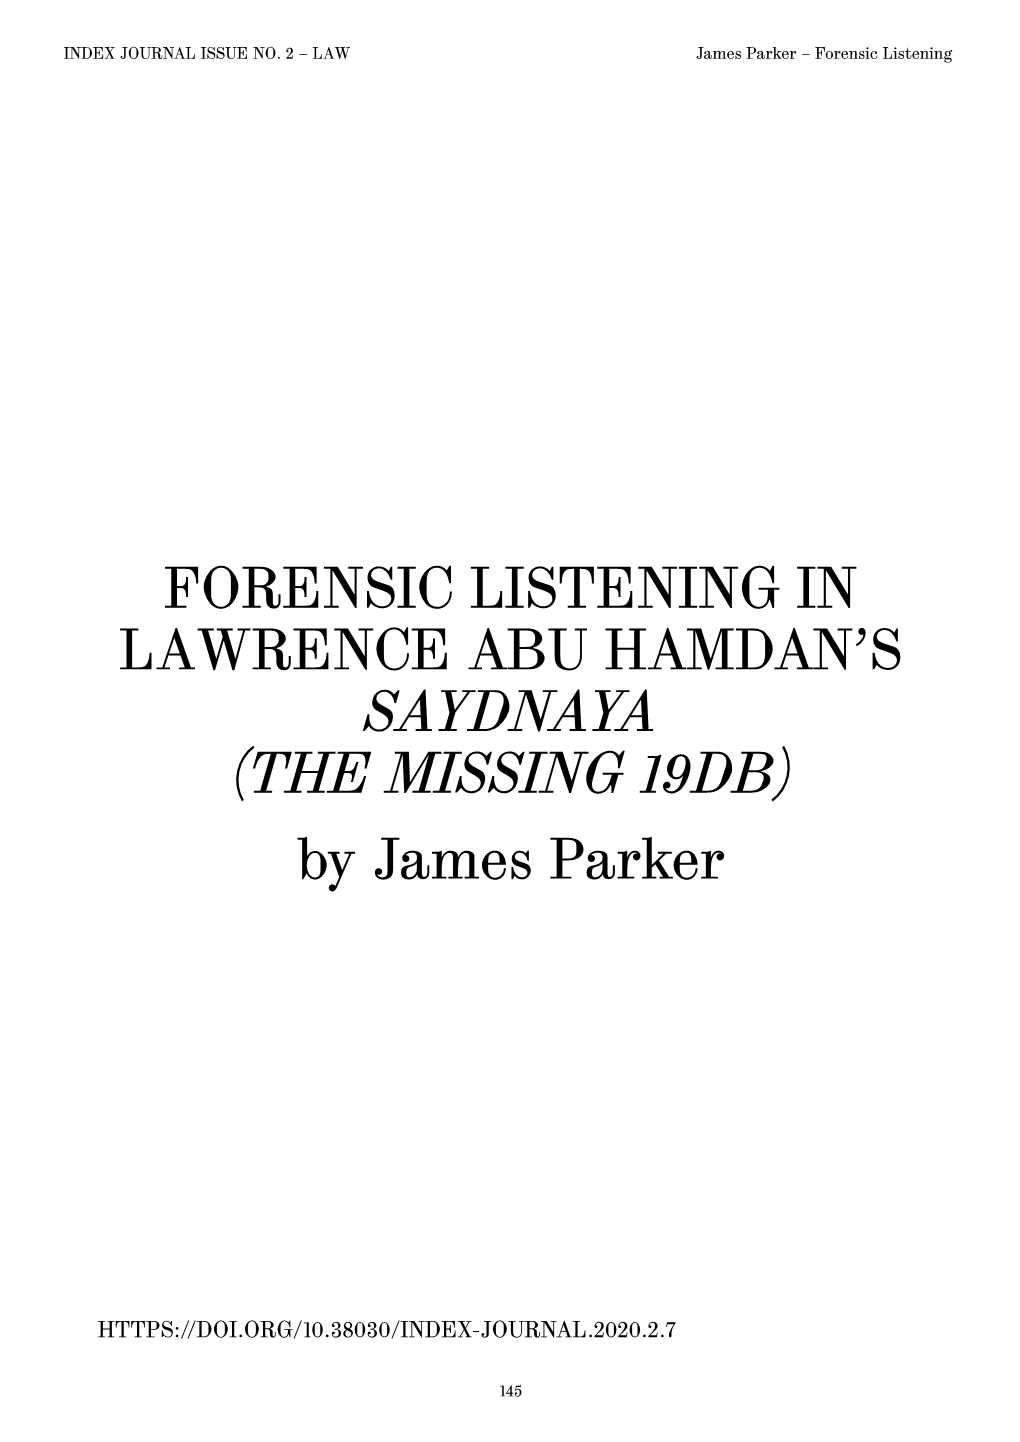 FORENSIC LISTENING in LAWRENCE ABU HAMDAN’S SAYDNAYA (THE MISSING 19DB) by James Parker